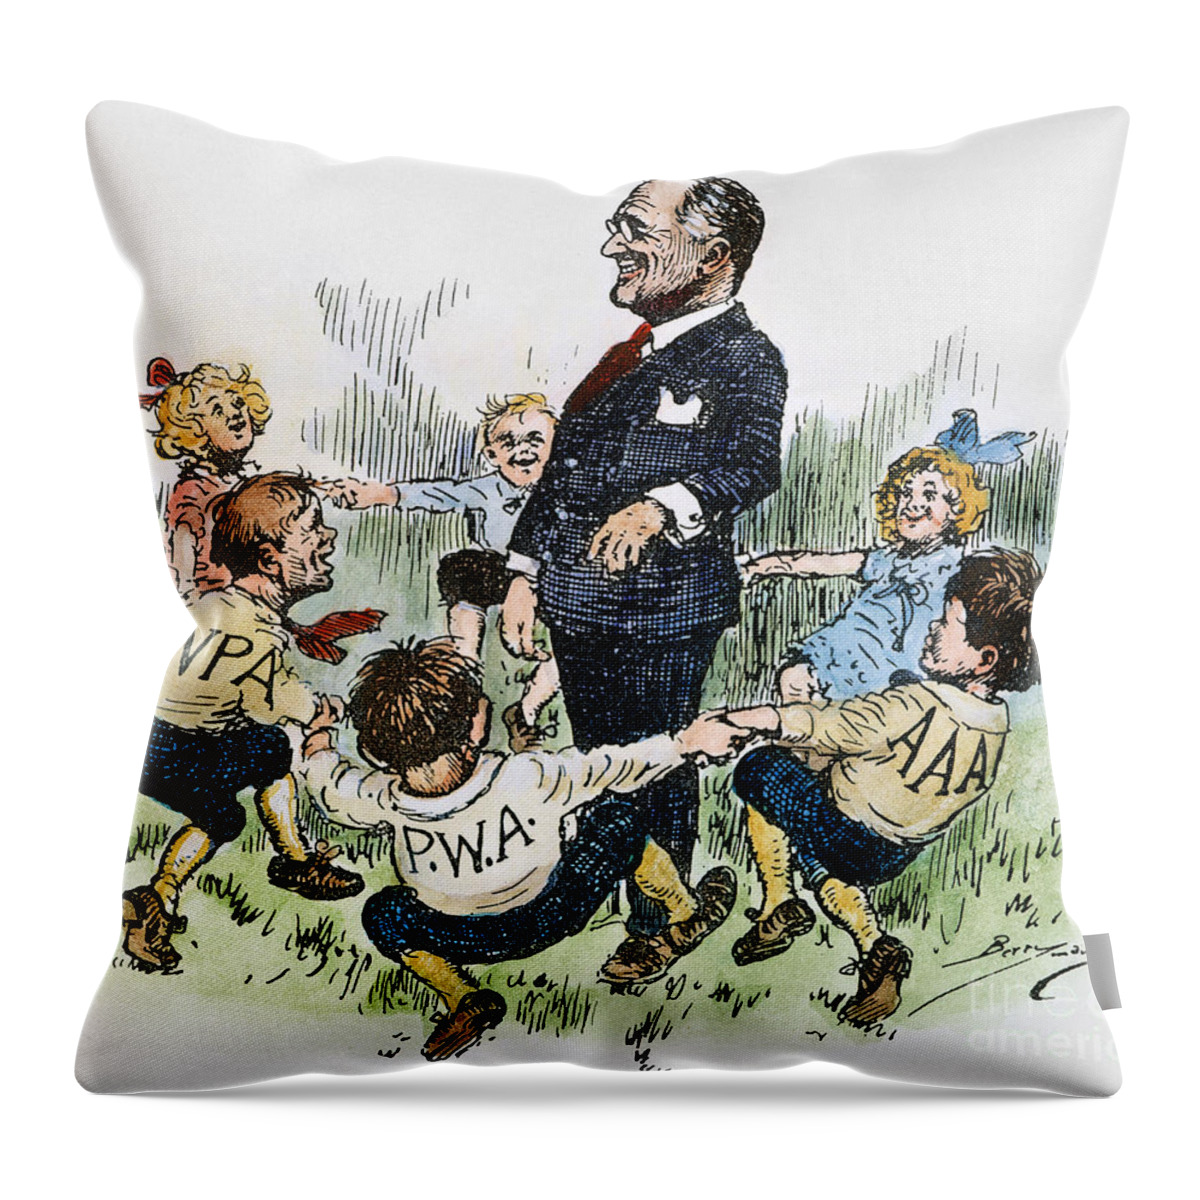 1930s Throw Pillow featuring the photograph Cartoon: New Deal, 1935 #2 by Granger